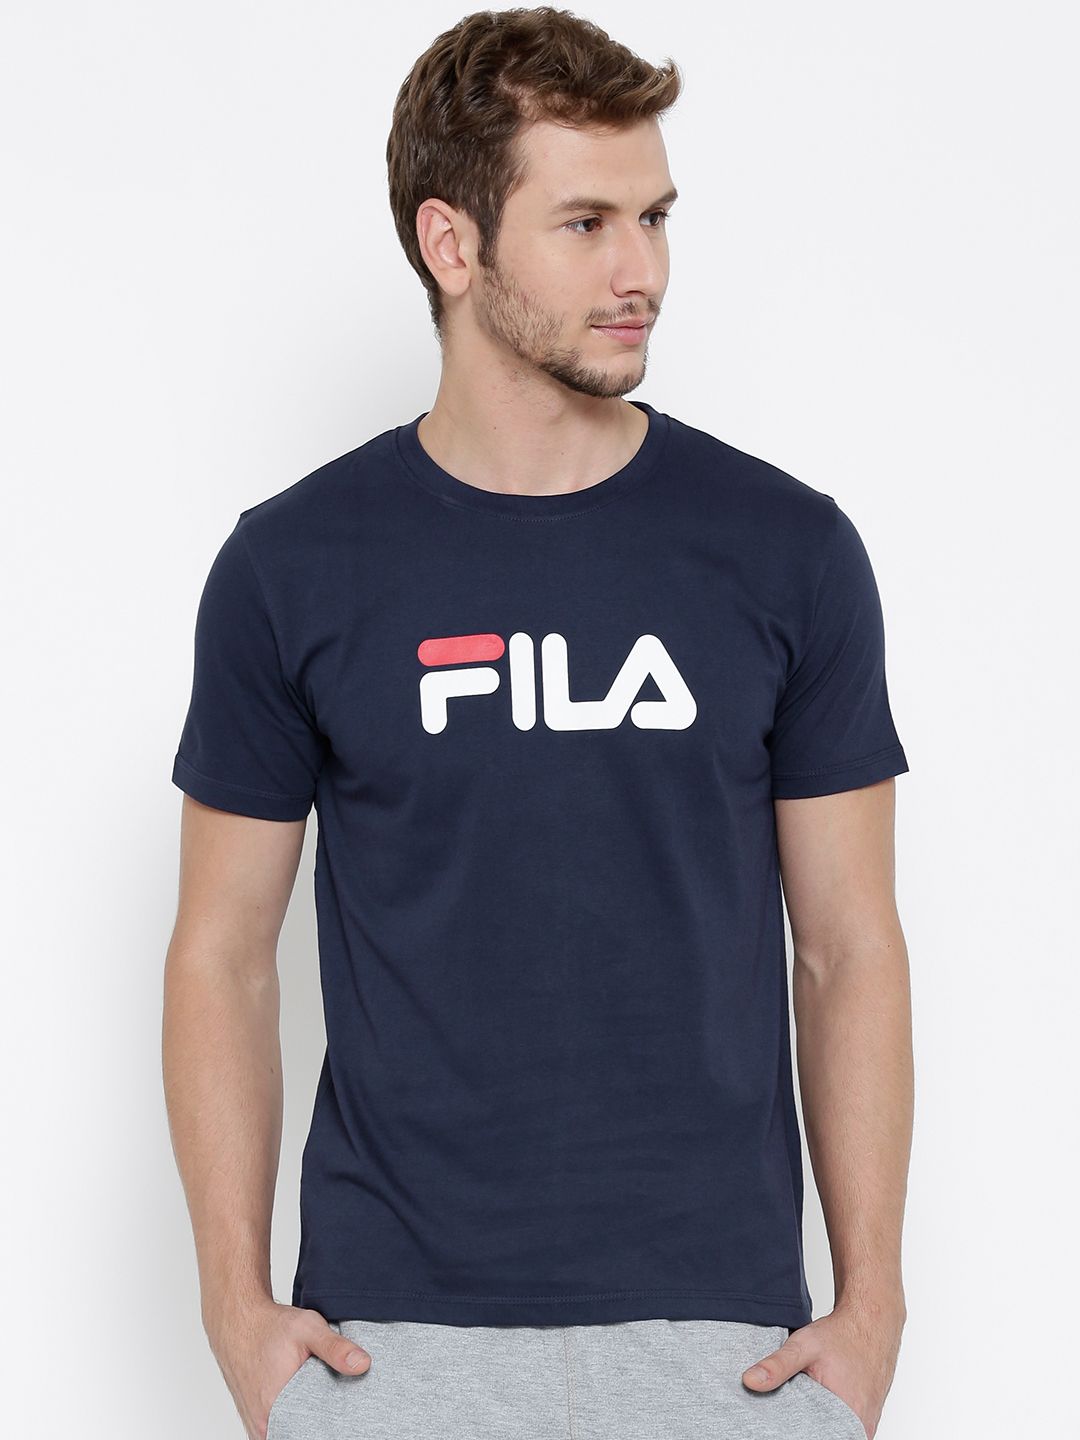 Fila Sweatshirt India Sale Up To 33 Discounts